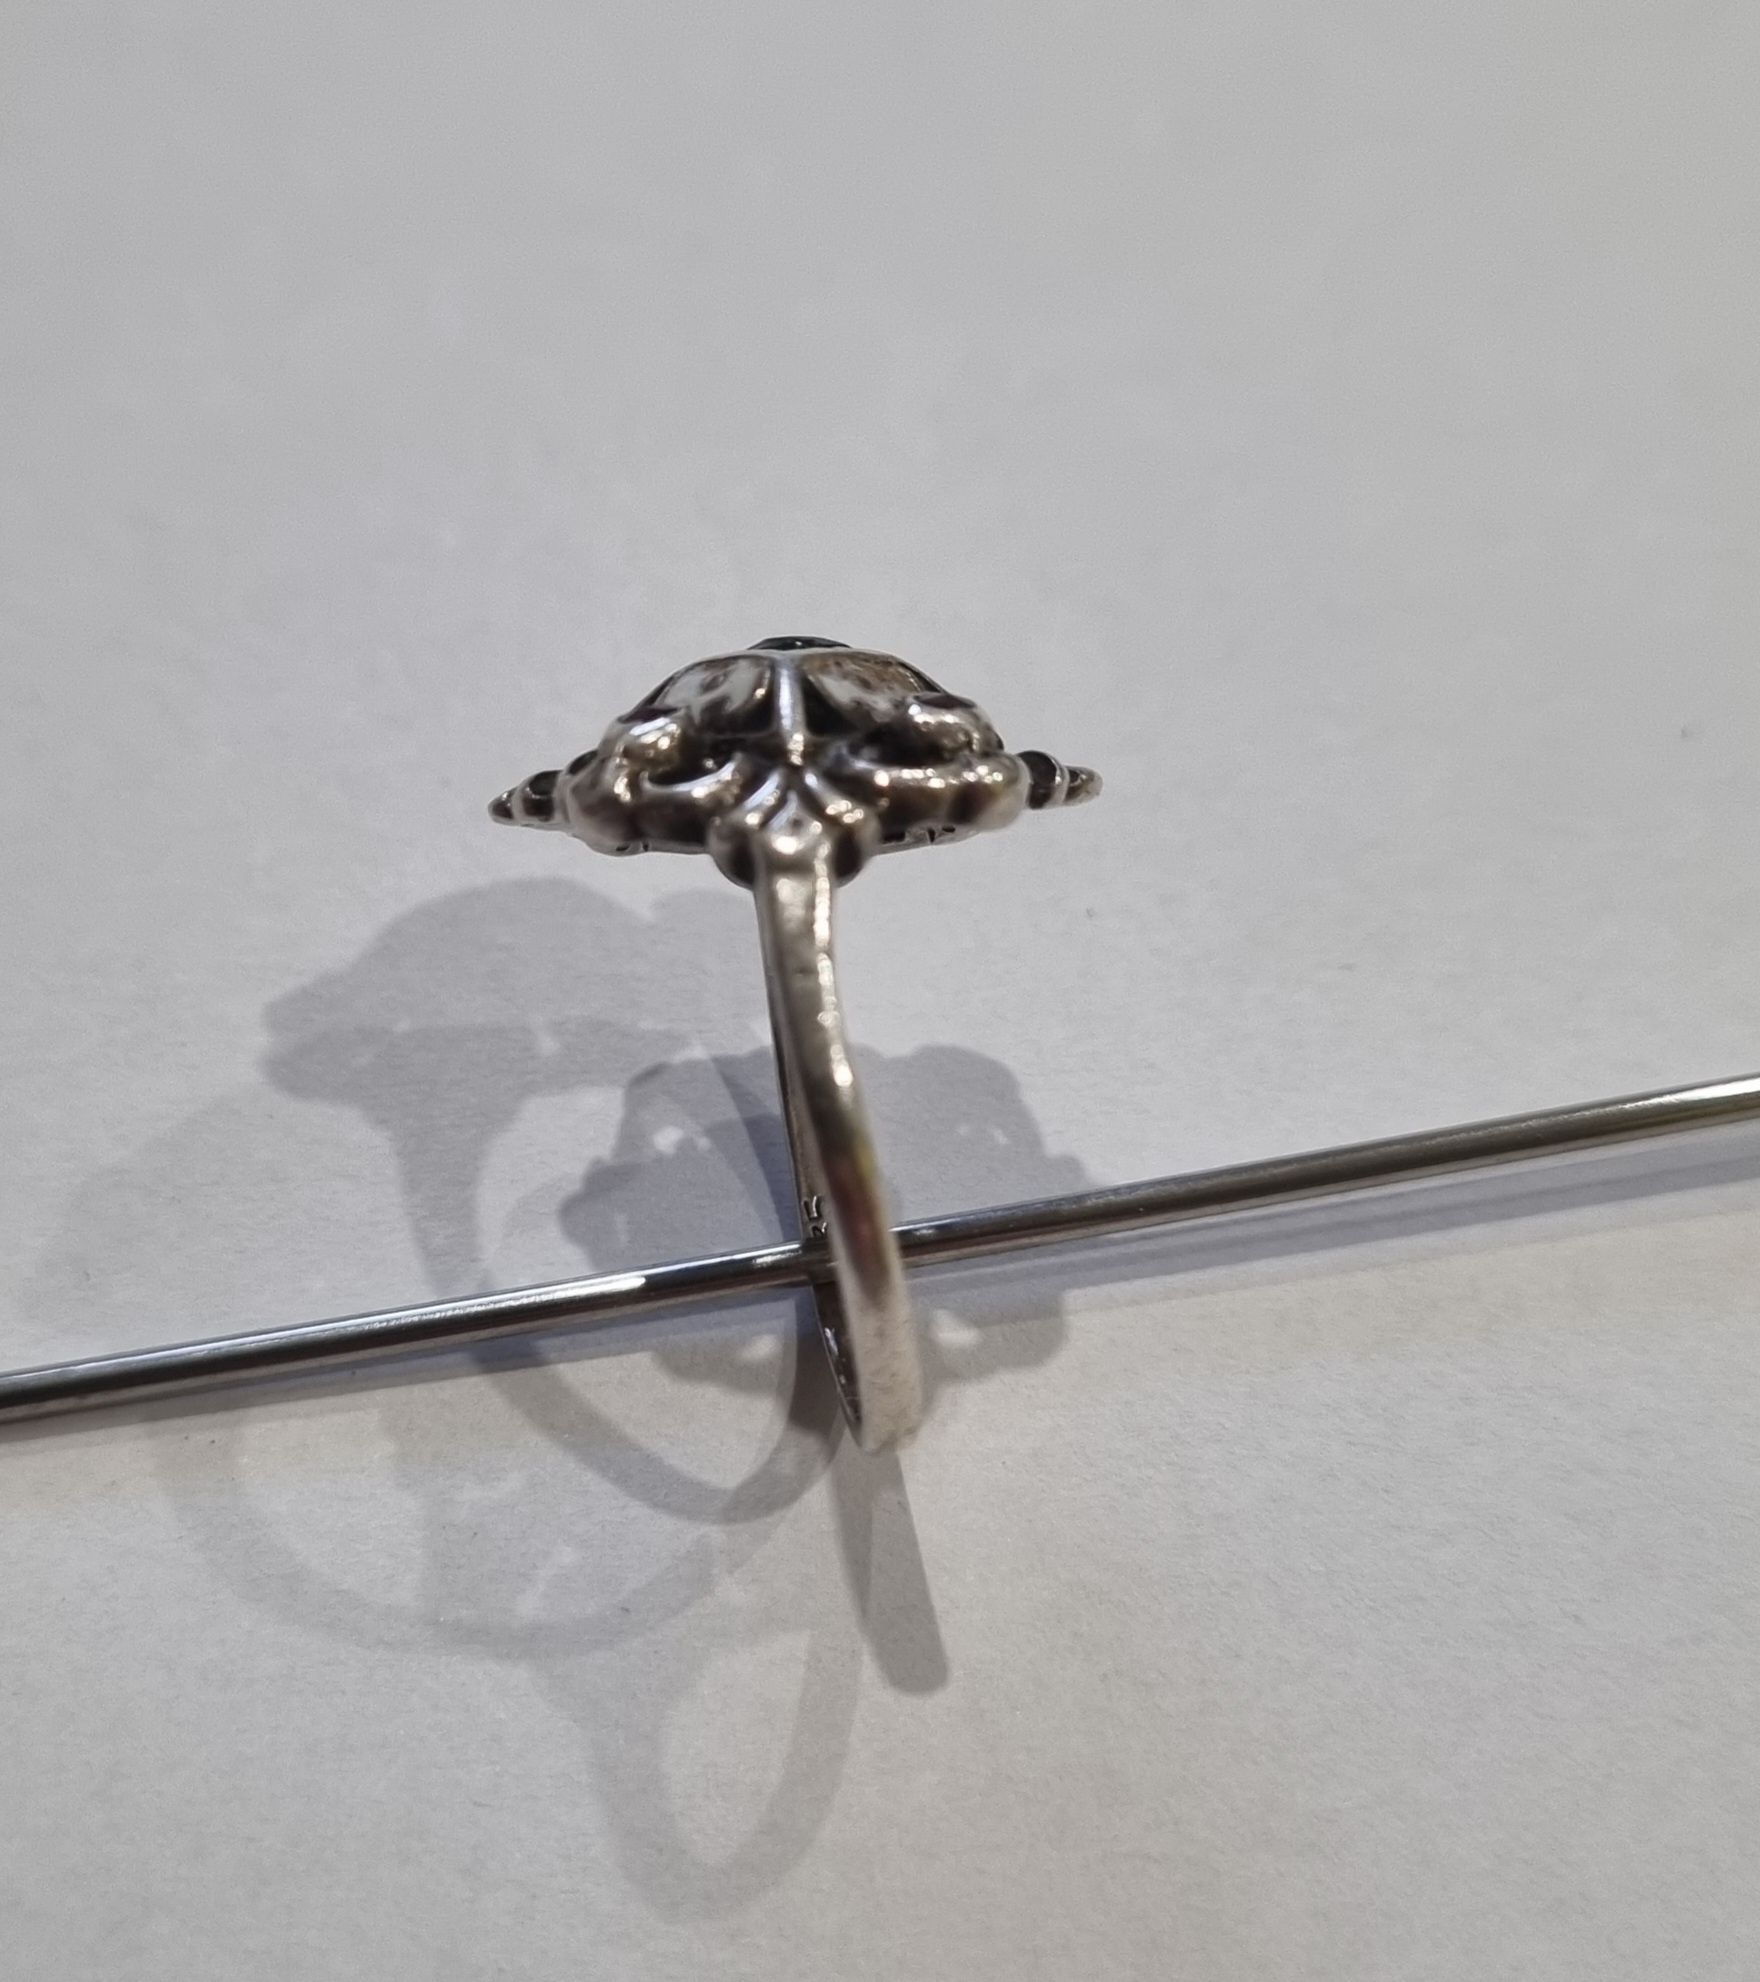 Dawny pierścionek srebrny z granatami i szmaragdem srebro 935